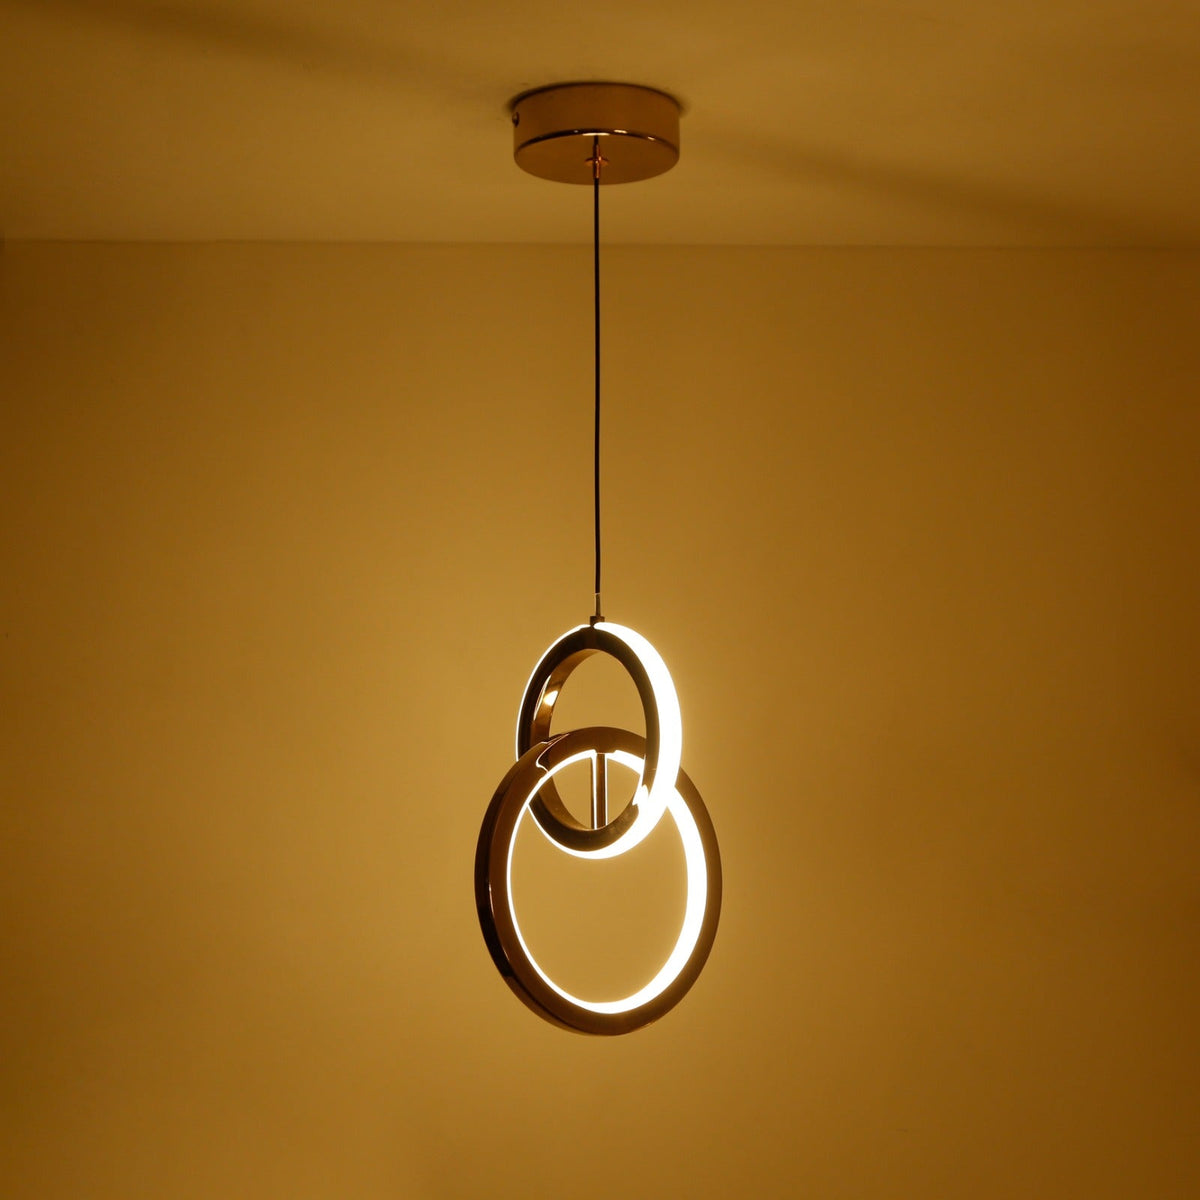 Buy See Through LED Pendant Light hanging lamp